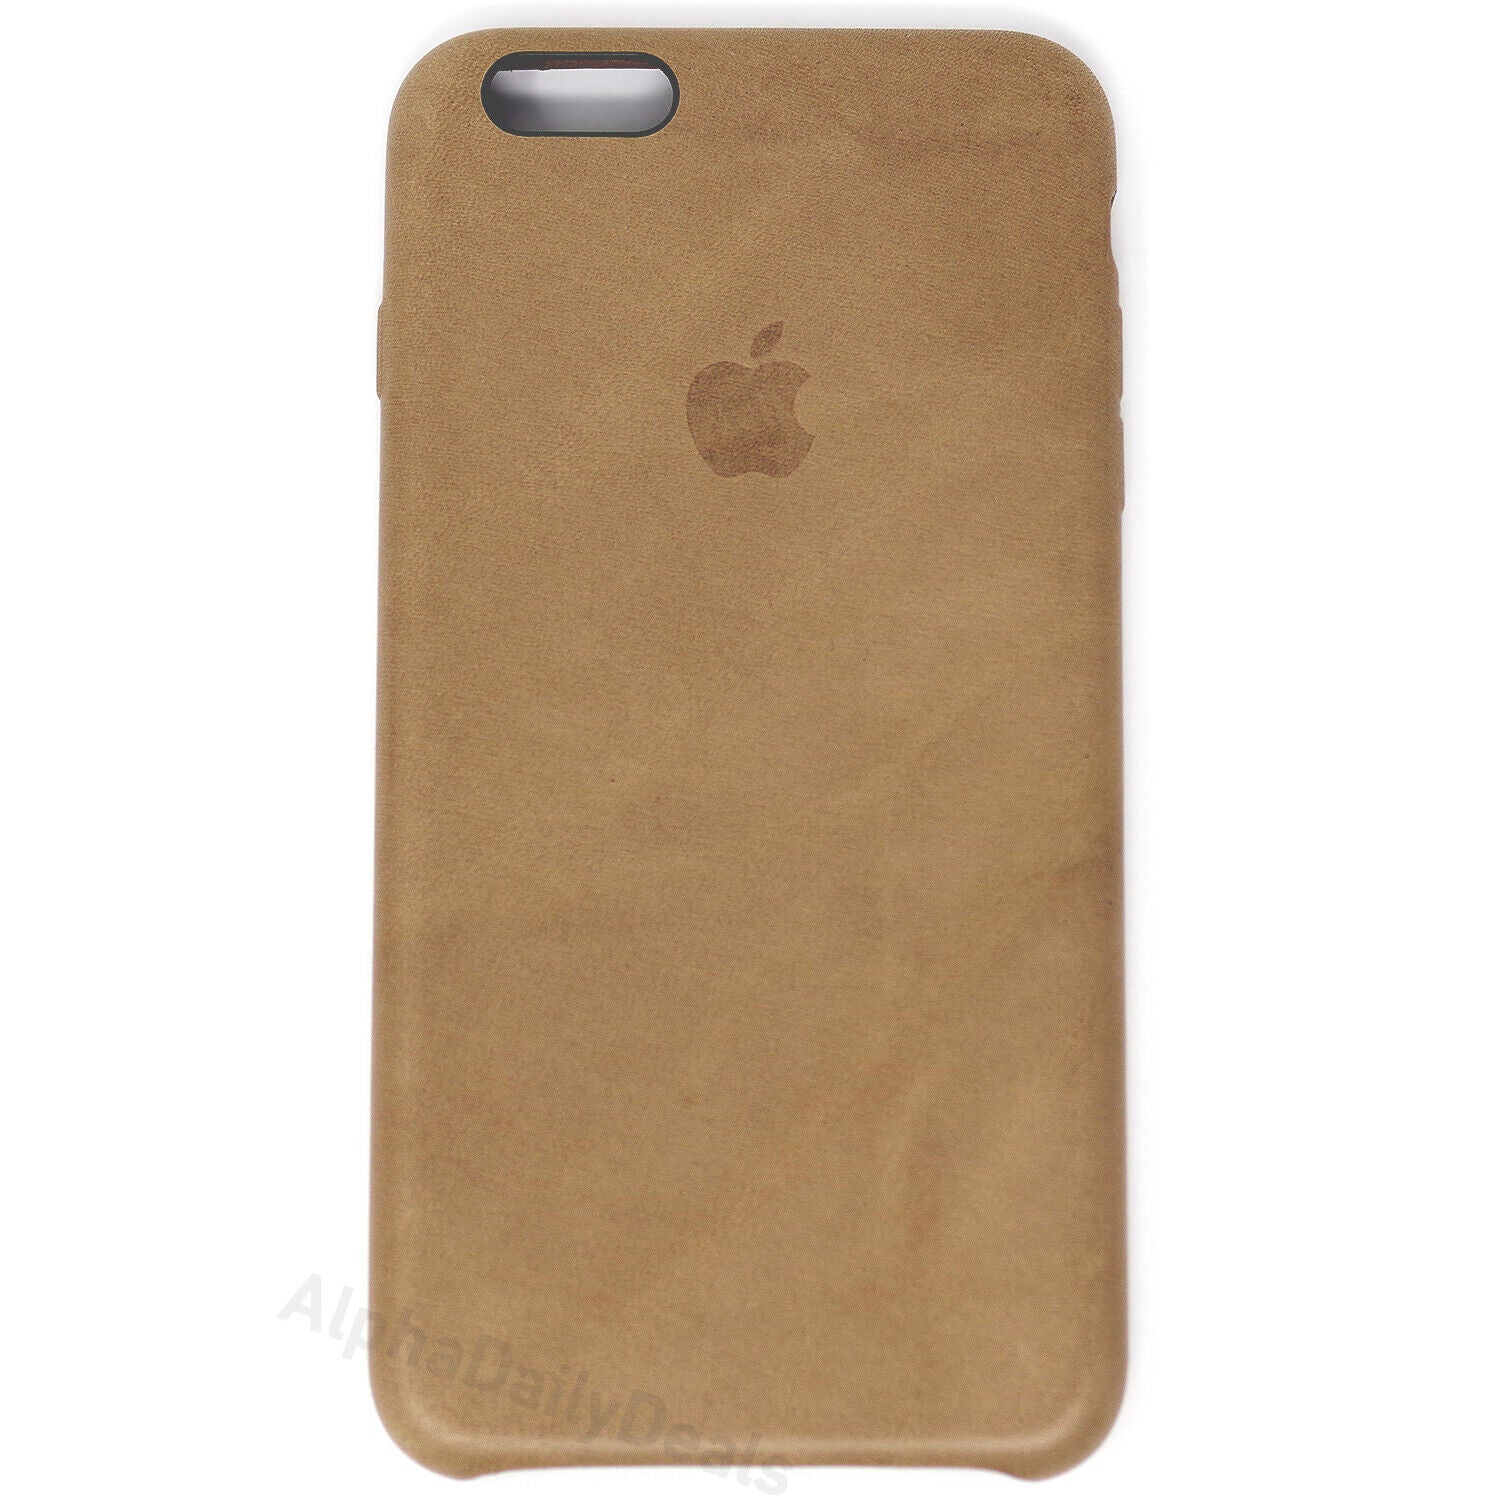 Genuine OEM Apple iPhone 6S Plus / 6 Plus Brown Leather Cover Case